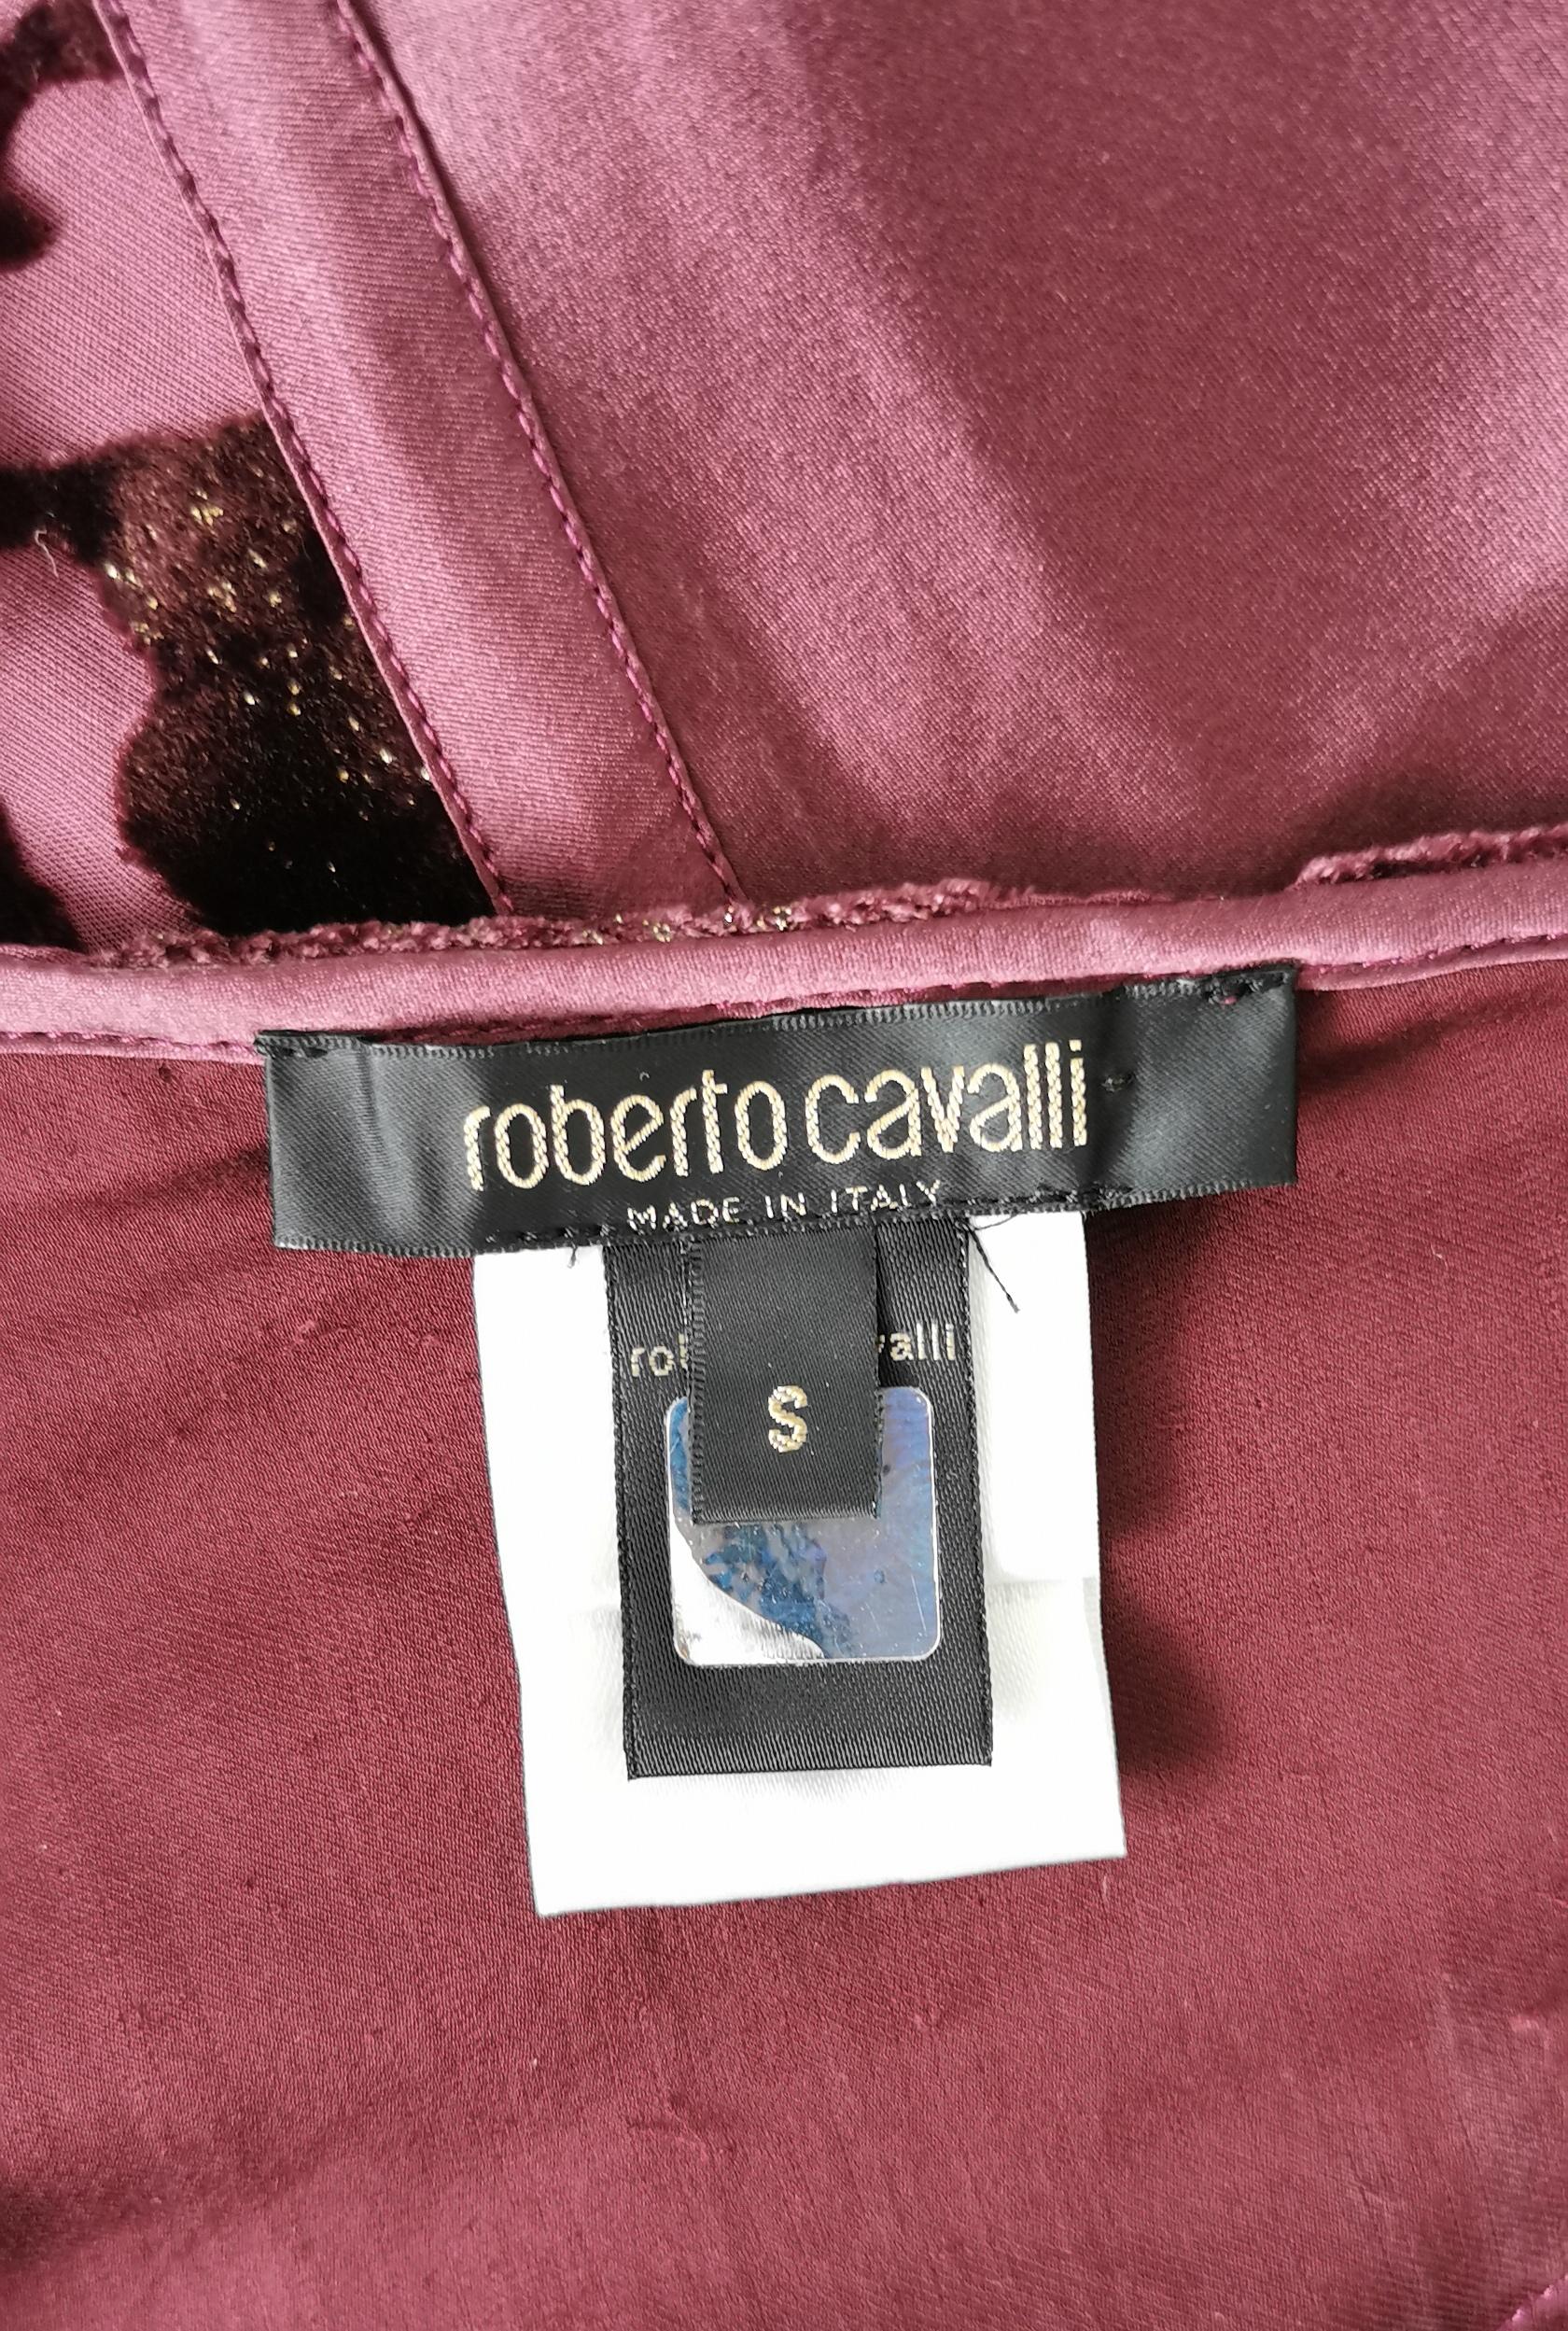 Roberto Cavalli burgandy brocade dress, FW 2004 For Sale 1